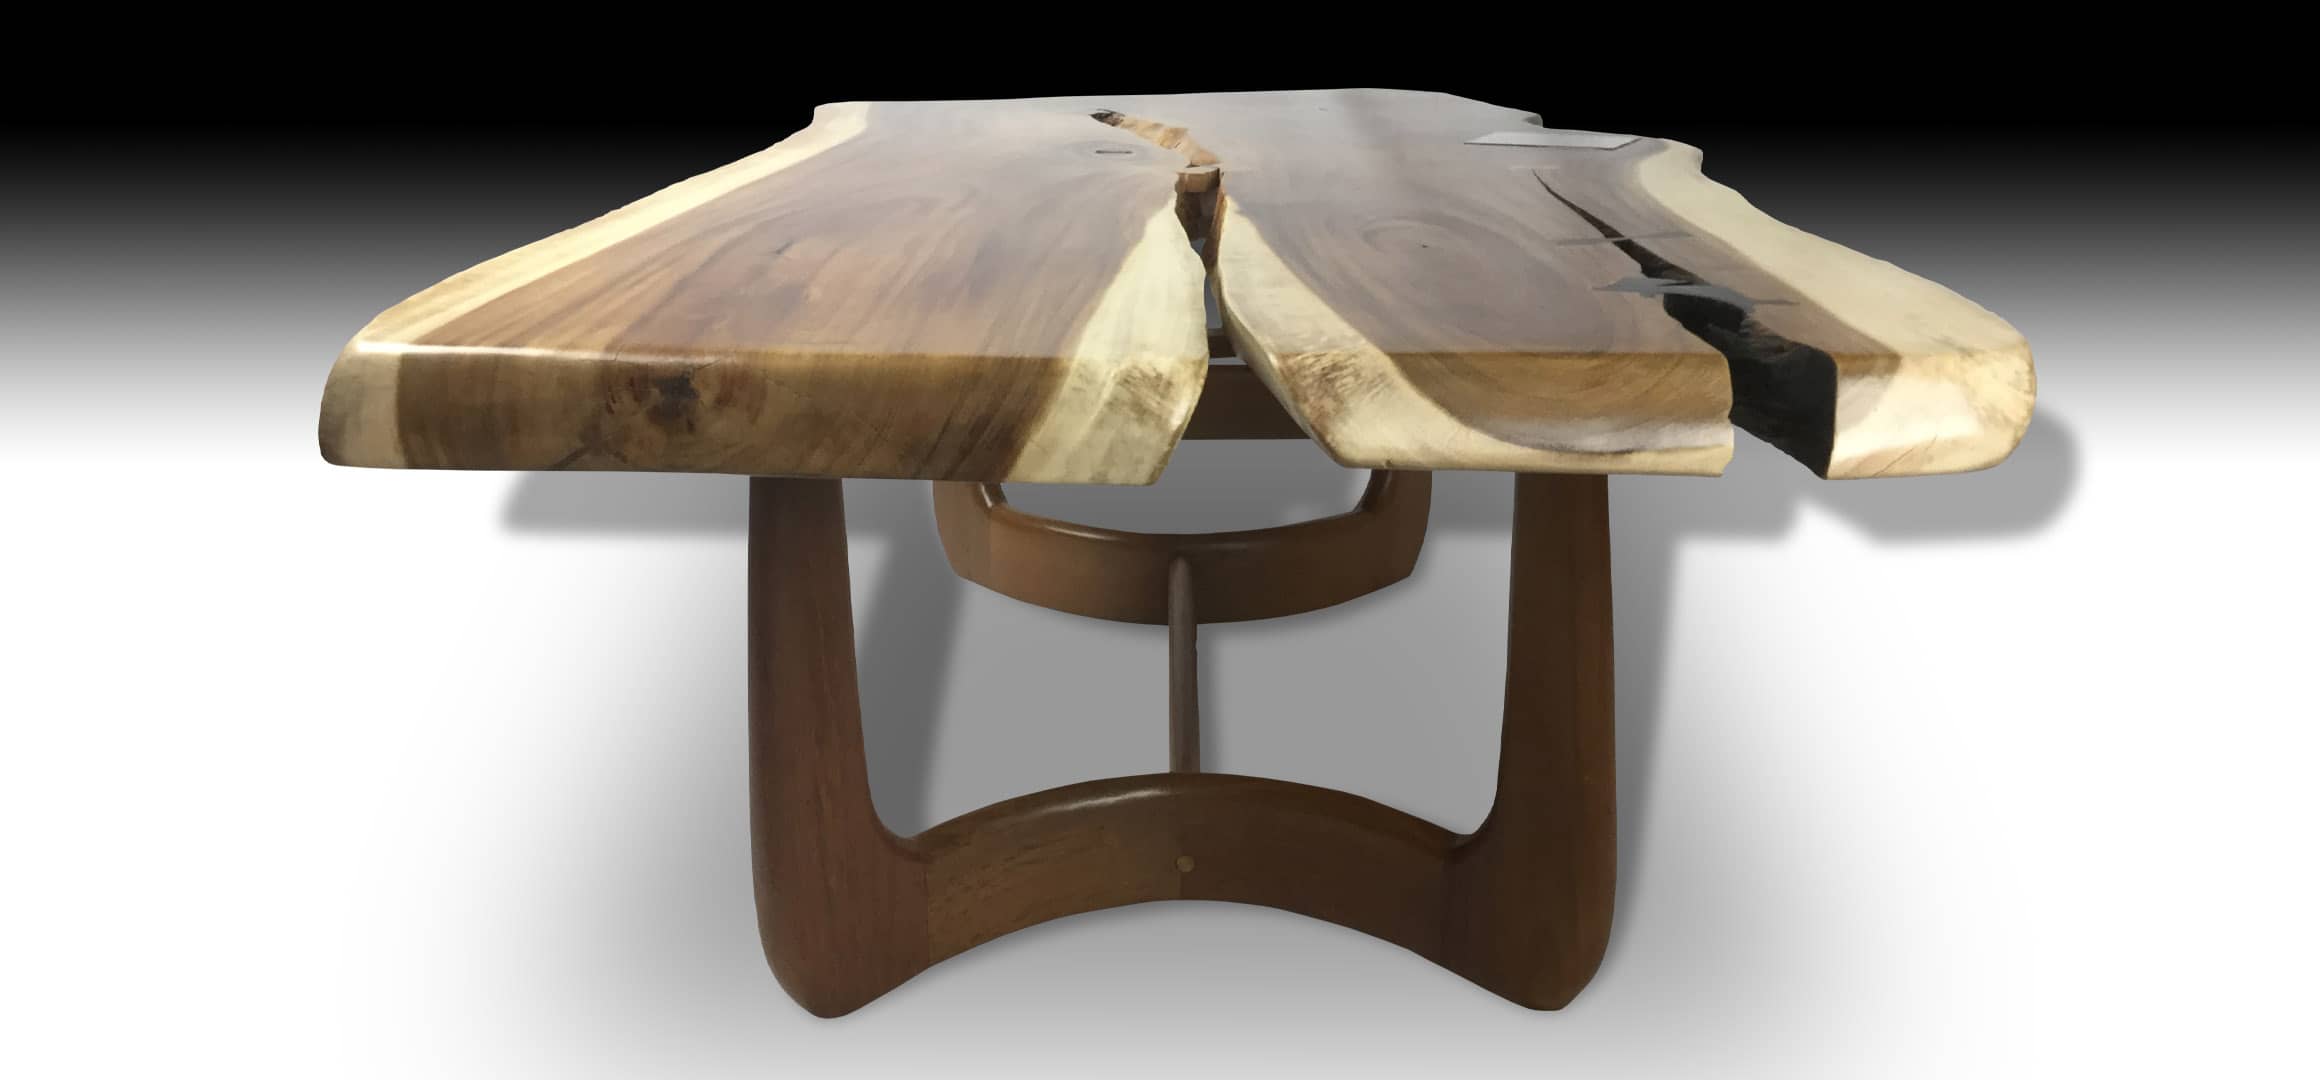 Canyon live edge Suar wood coffee table with teak wood base